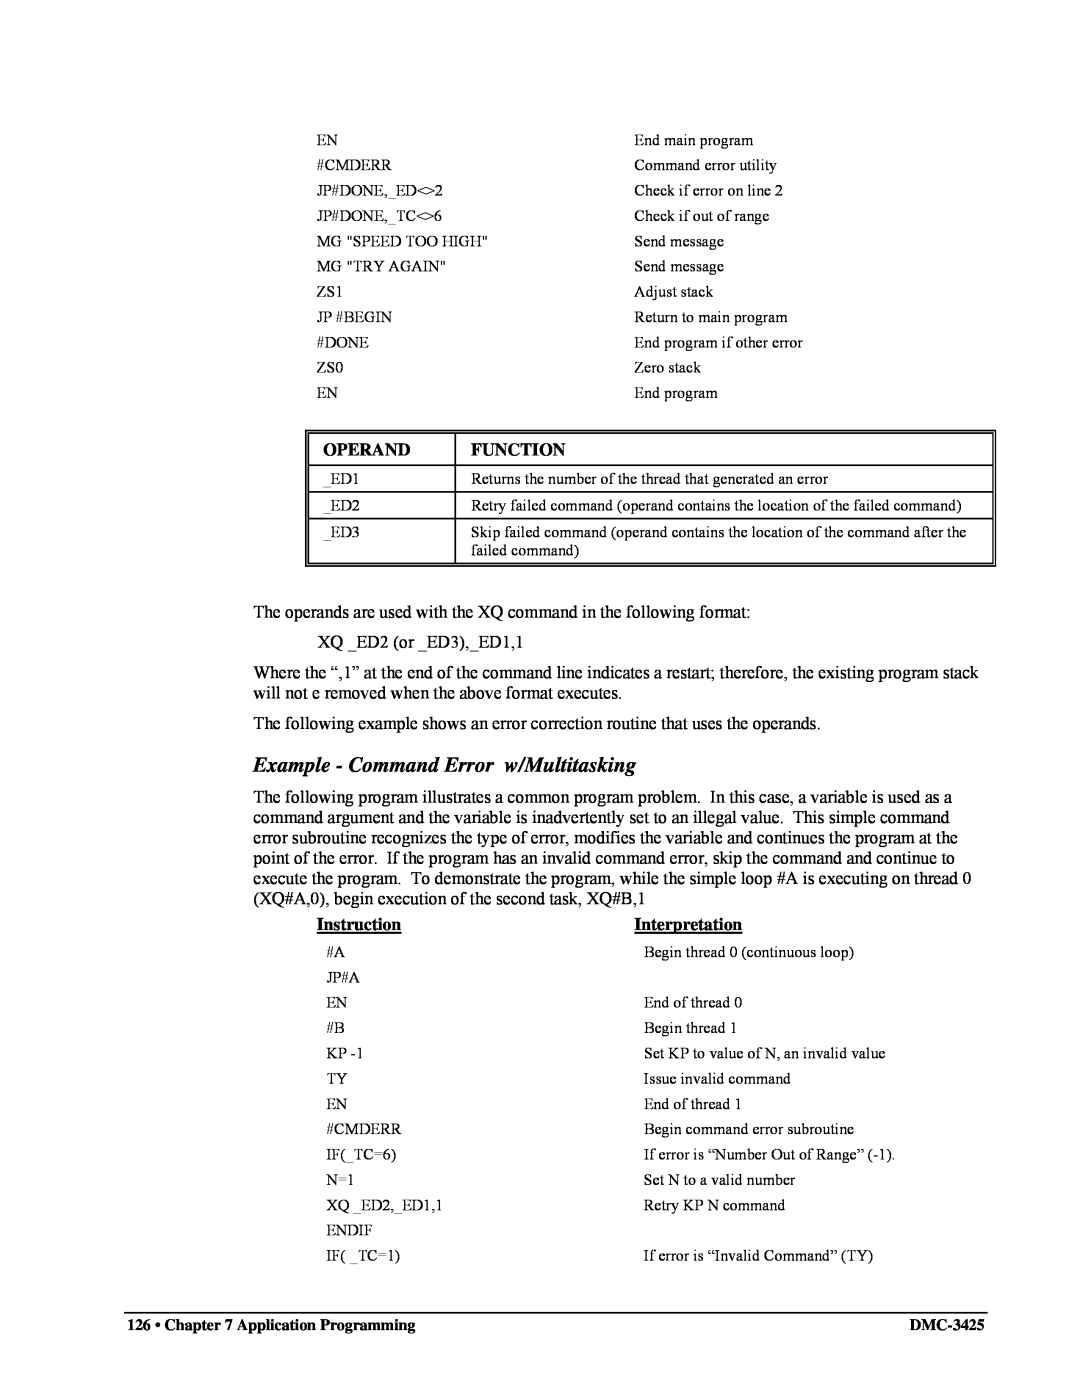 Galil DMC-3425 user manual Example - Command Error w/Multitasking, Operand, Function, Instruction, Interpretation 